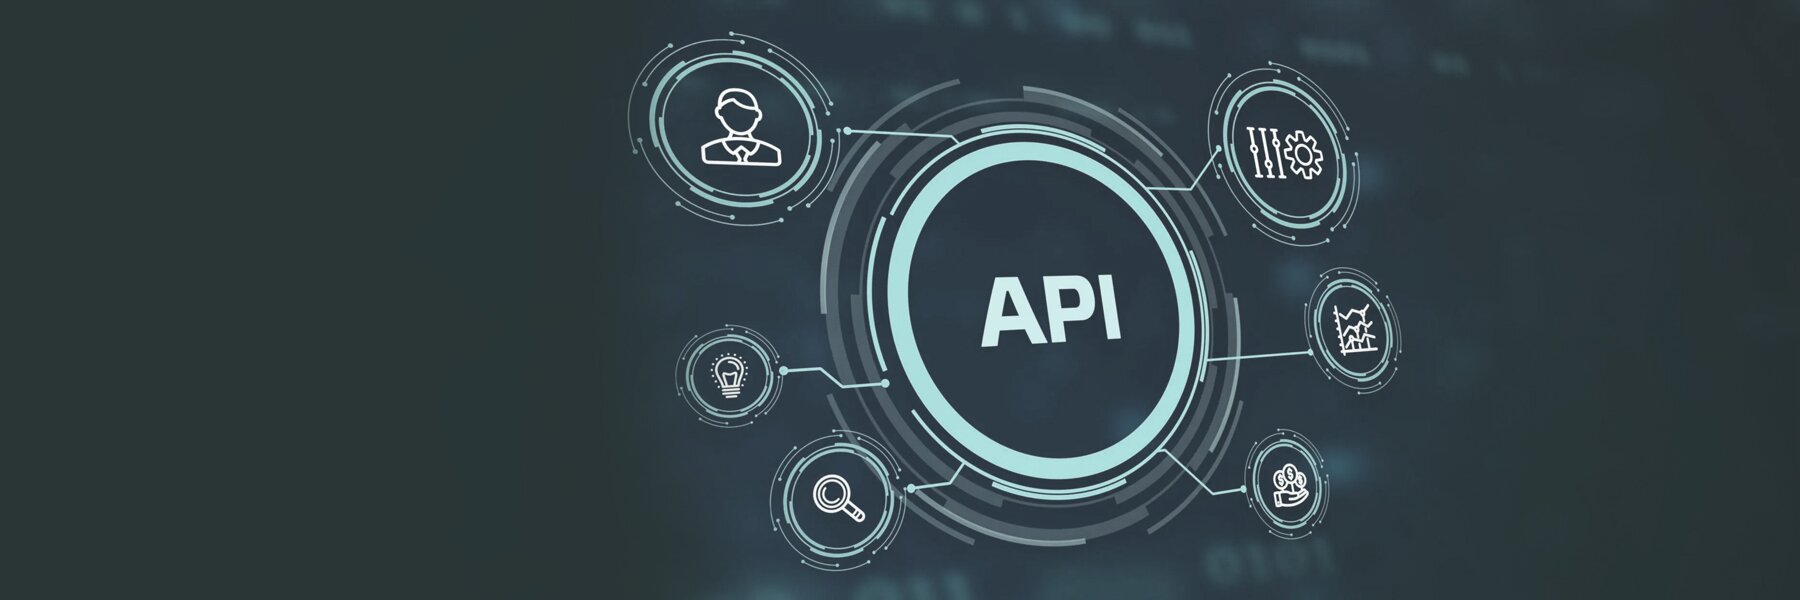 Alphatronics-API-Banner-02.jpg